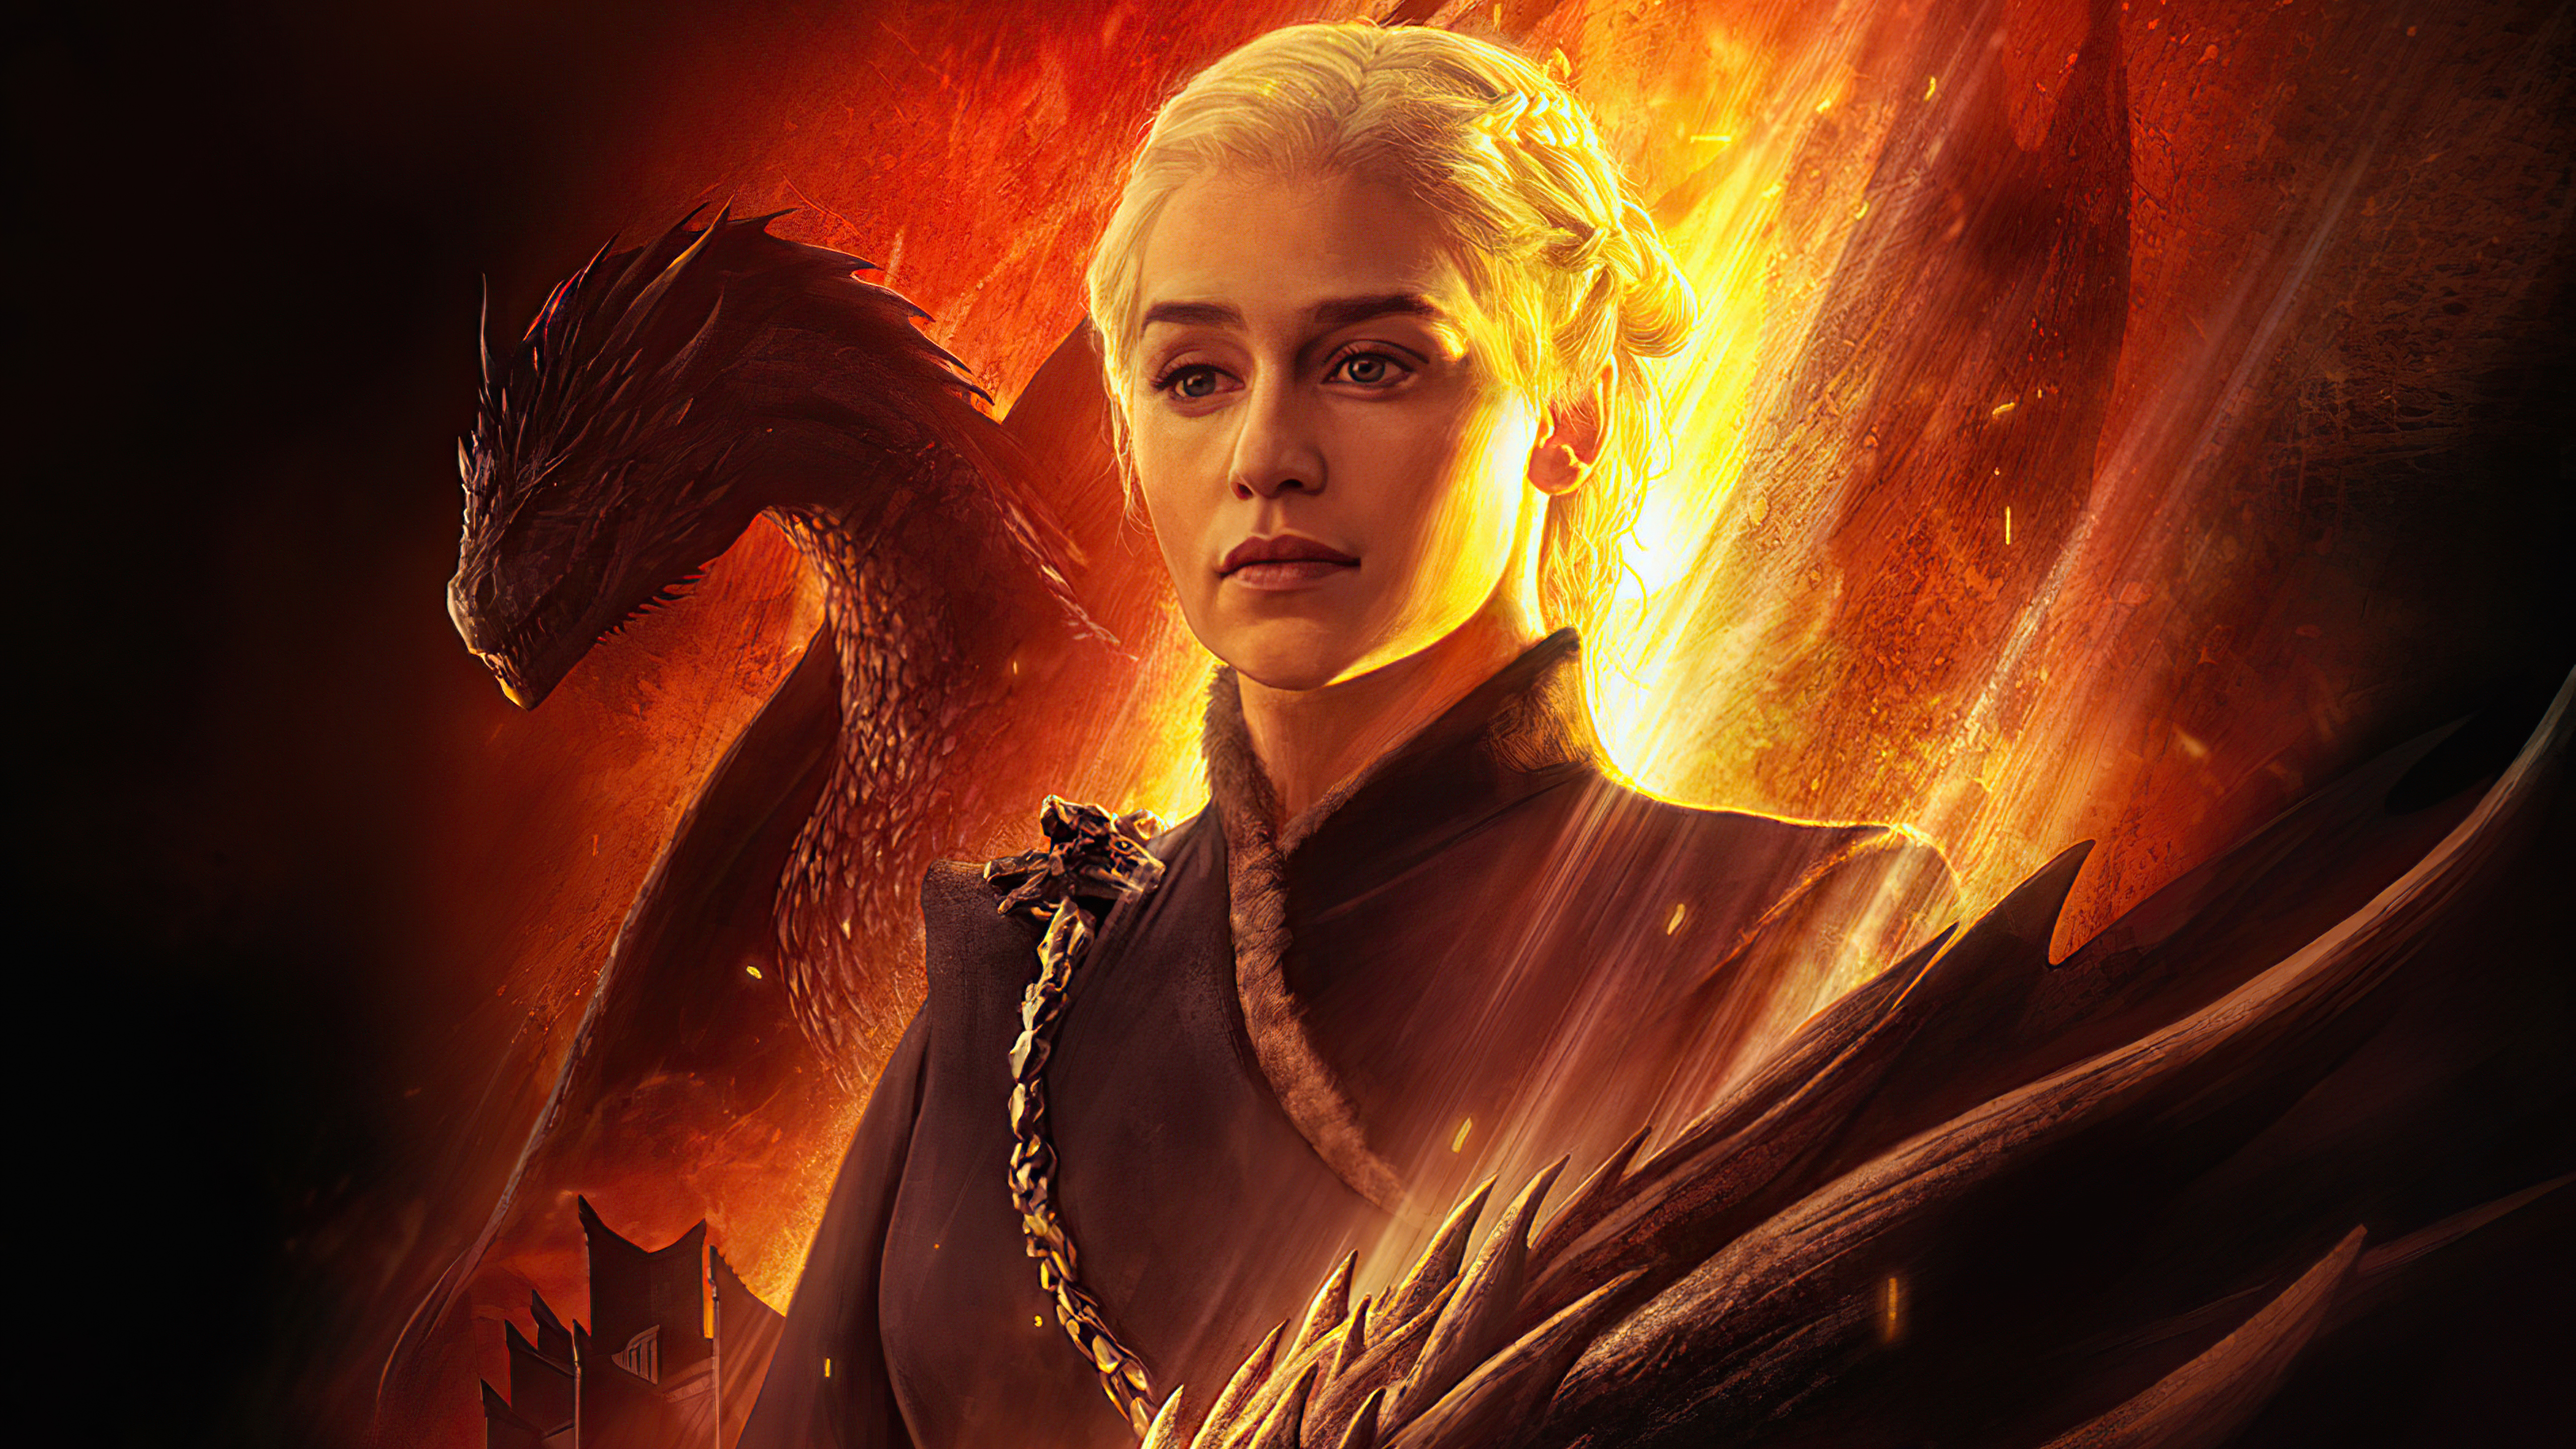 Wallpapers Game Of Thrones Daenerys Targaryen TV show on the desktop